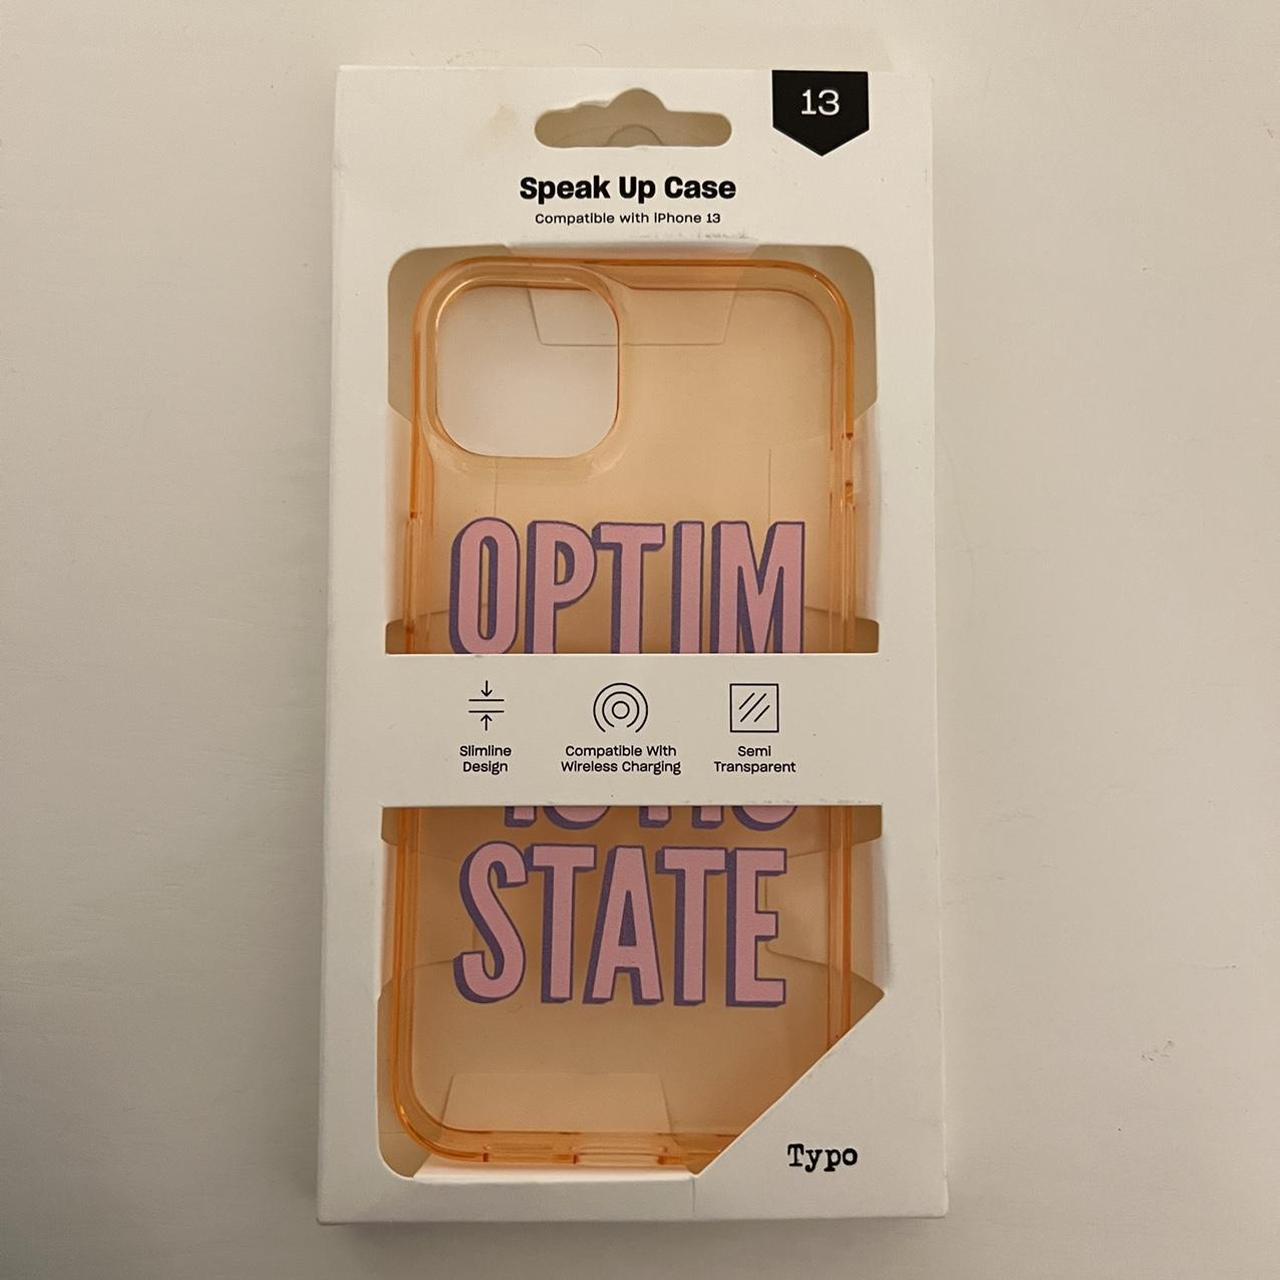 Product Image 1 - Orange “OPTIMISTIC STATE” iPhone 13